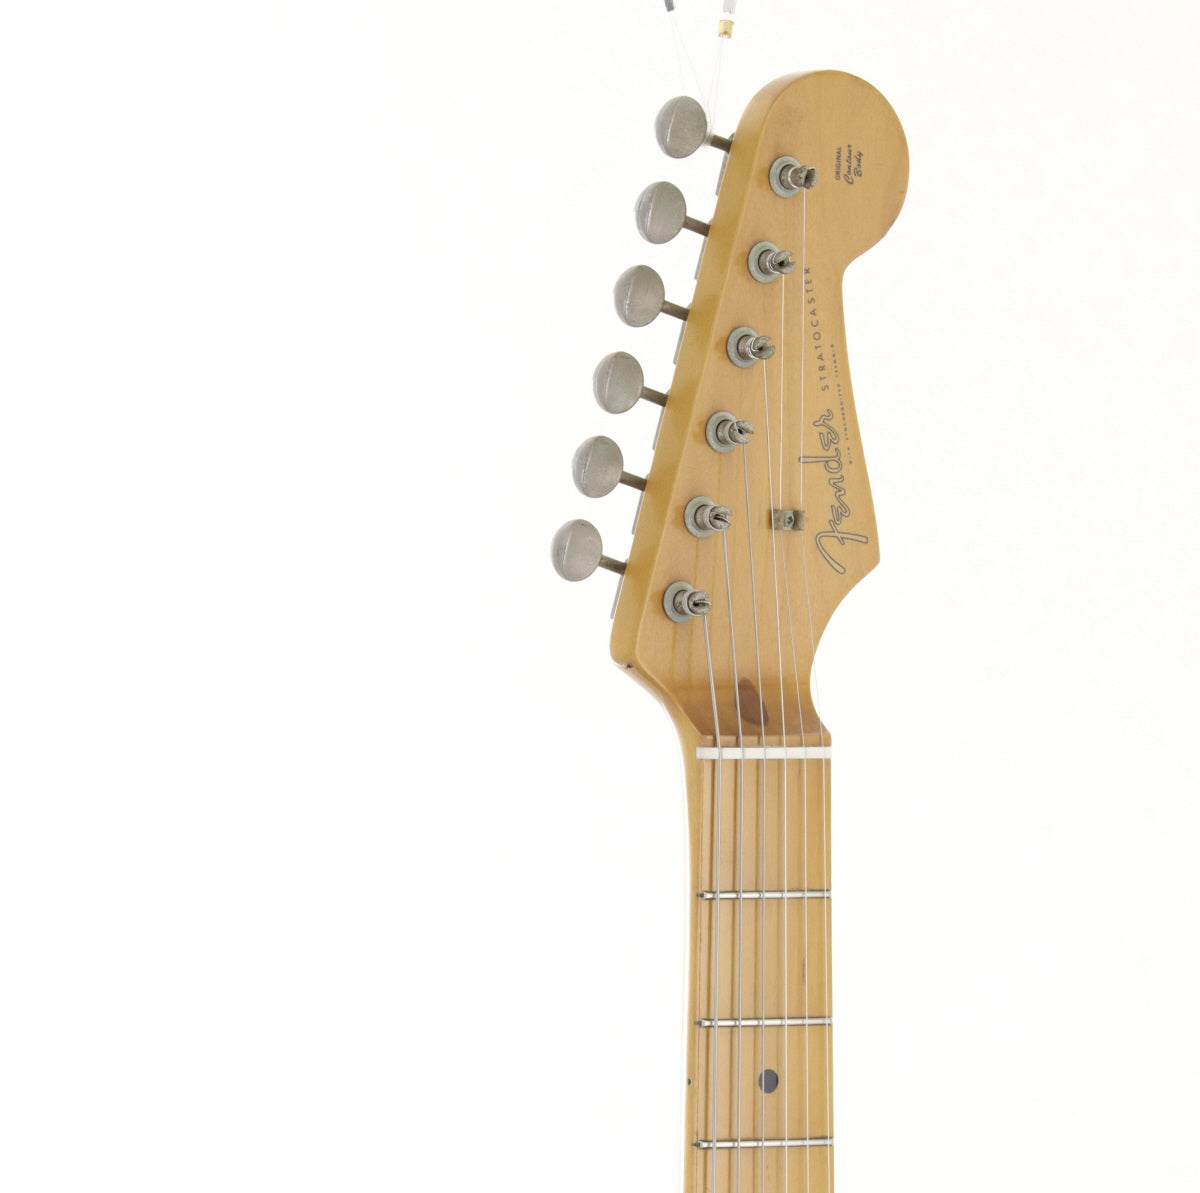 [SN Q027603] USED FENDER JAPAN / ST57-70 Vintage White [Made in Japan][3.41kg / 1993-94] Fender Stratocaster [08]